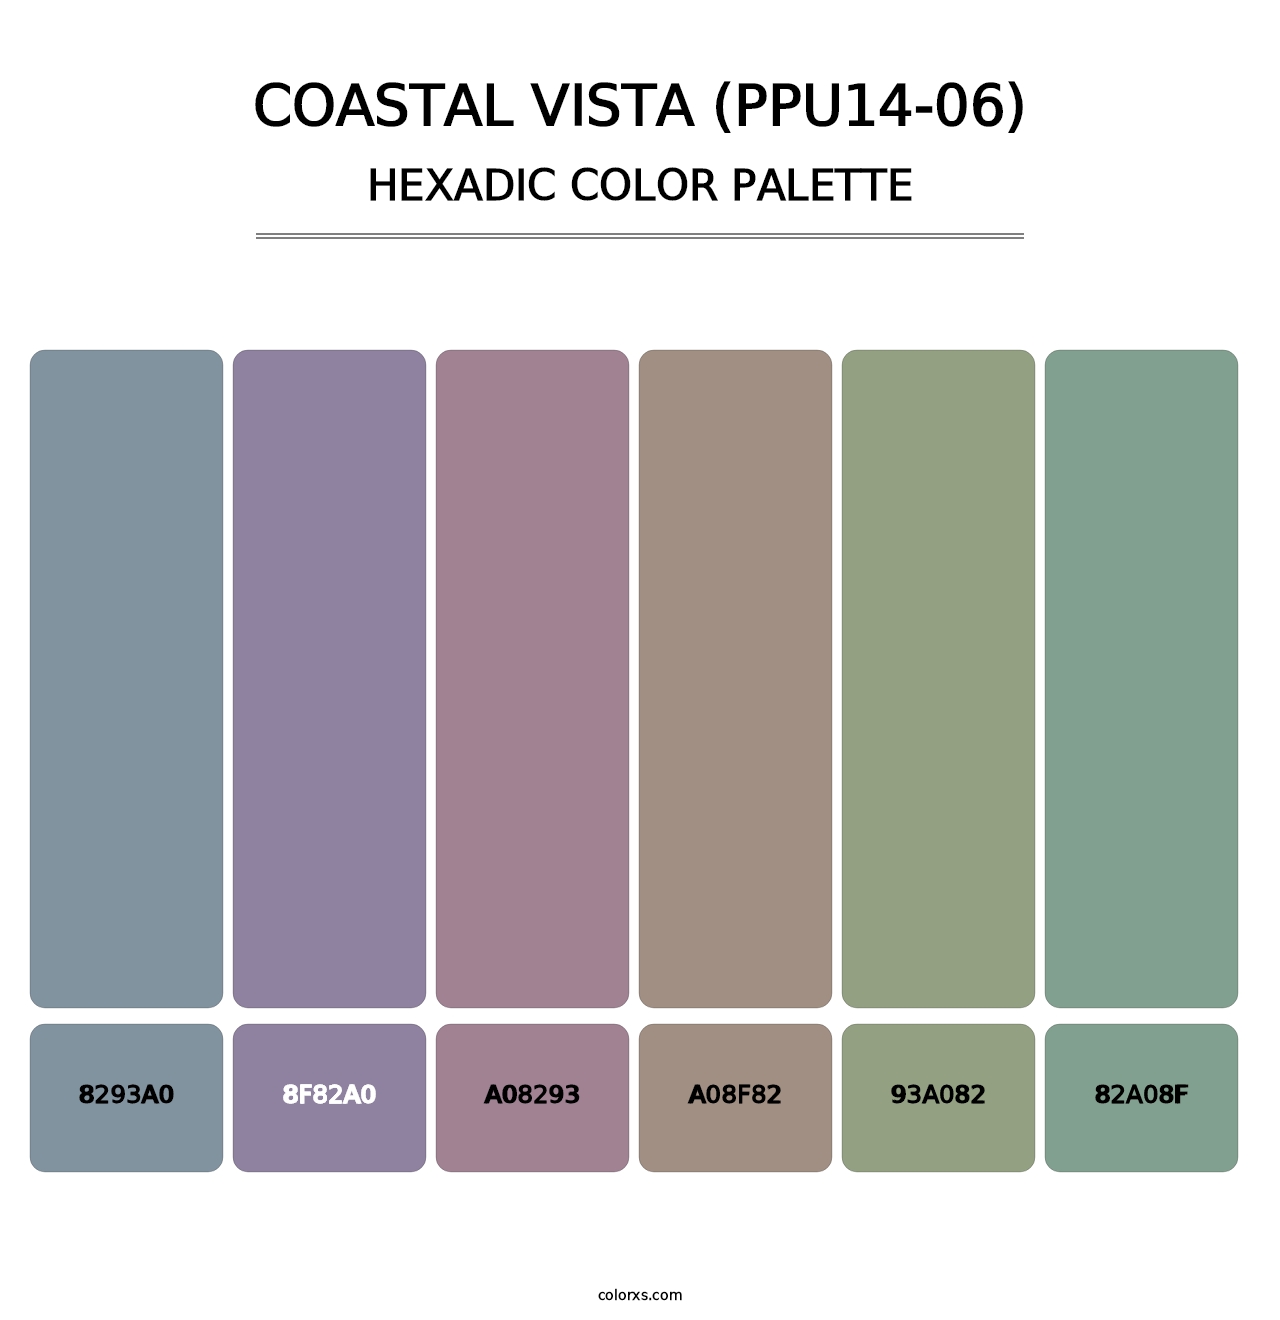 Coastal Vista (PPU14-06) - Hexadic Color Palette